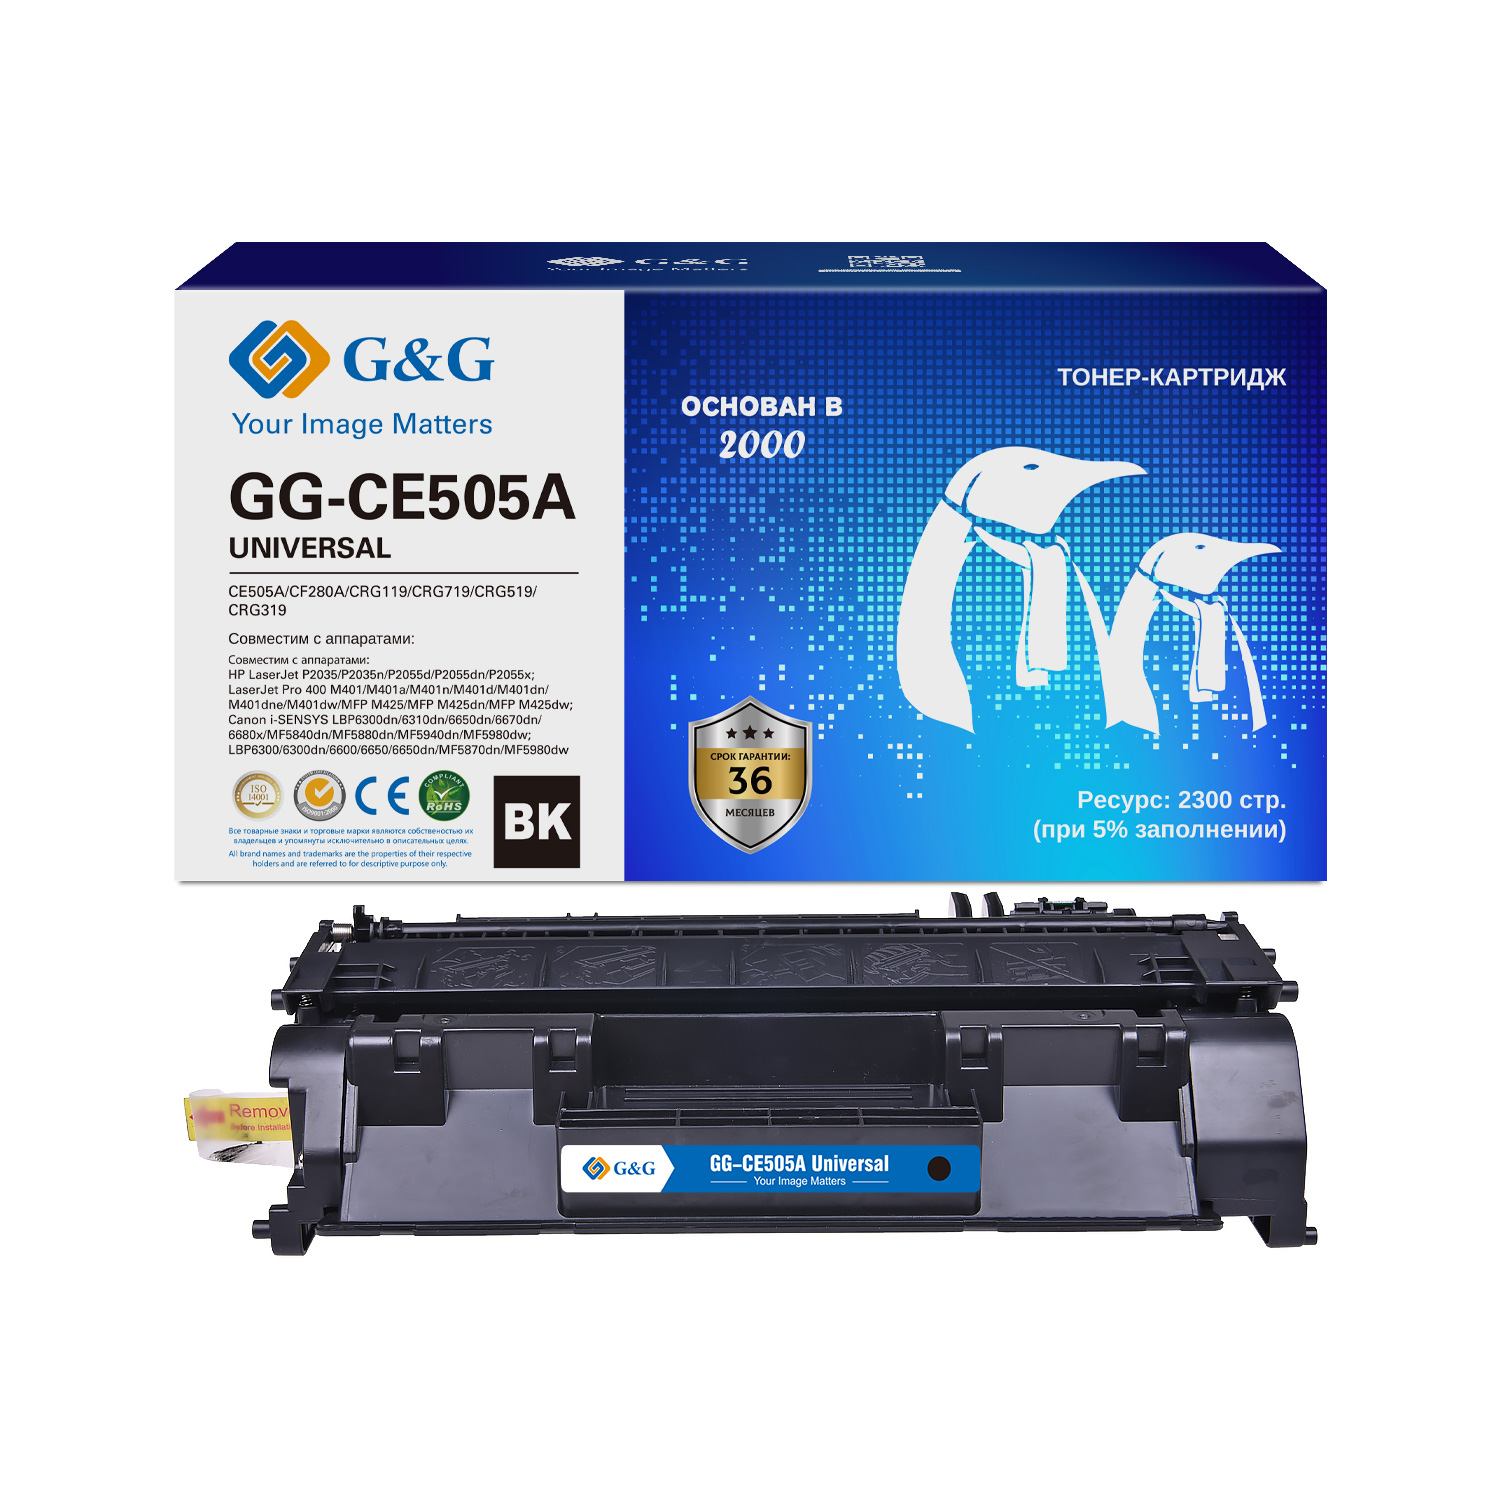 gg-ce505a-universal_0